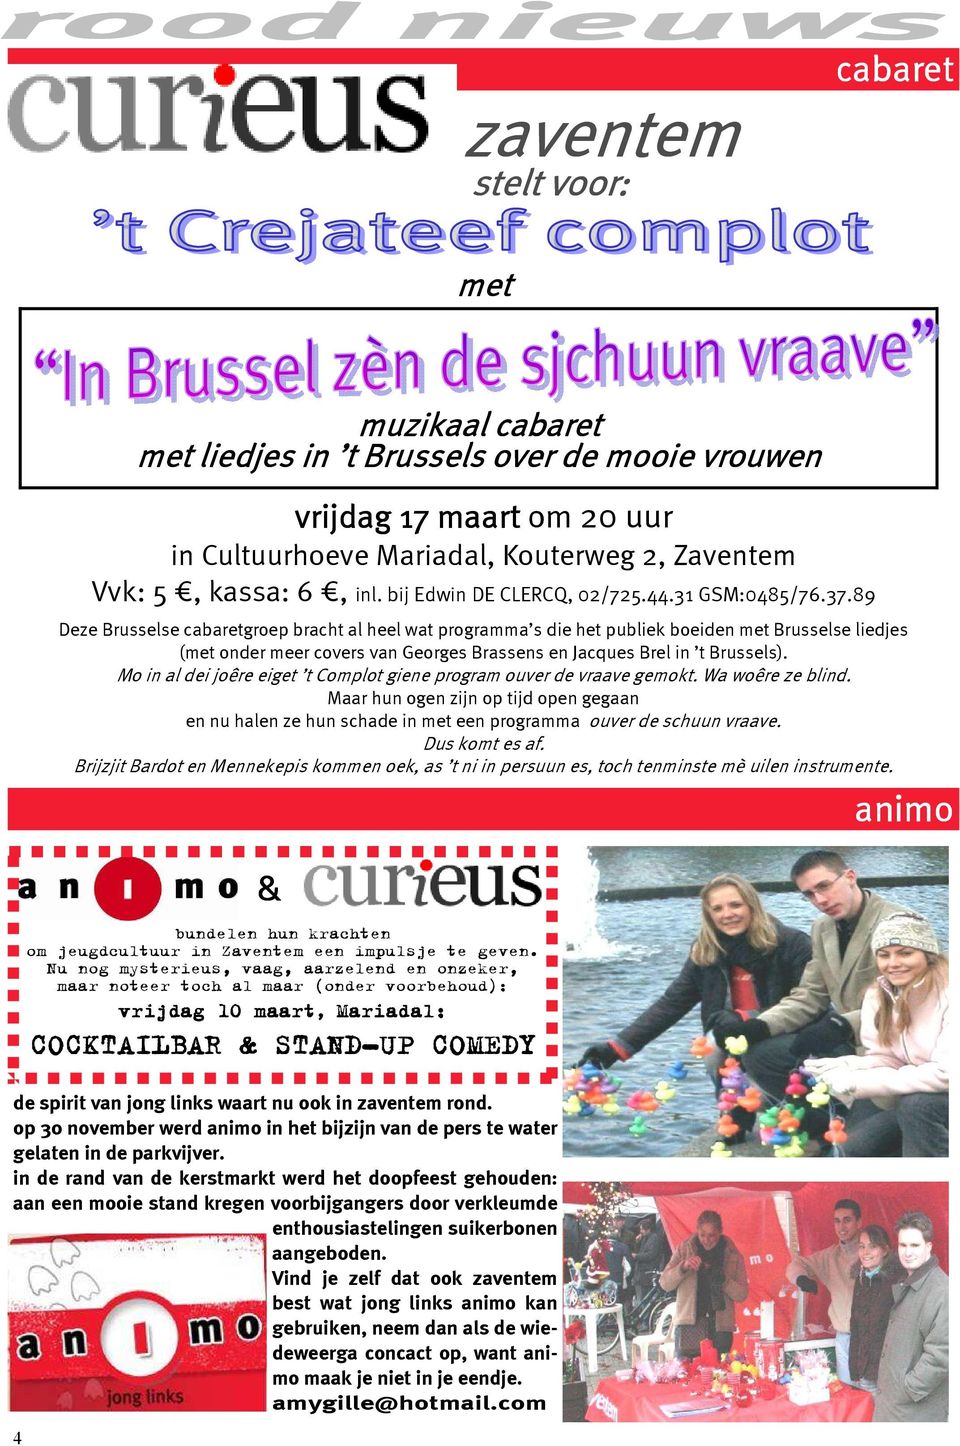 89 Deze Brusselse cabaretgroep bracht al heel wat programma s die het publiek boeiden met Brusselse liedjes (met onder meer covers van Georges Brassens en Jacques Brel in t Brussels).